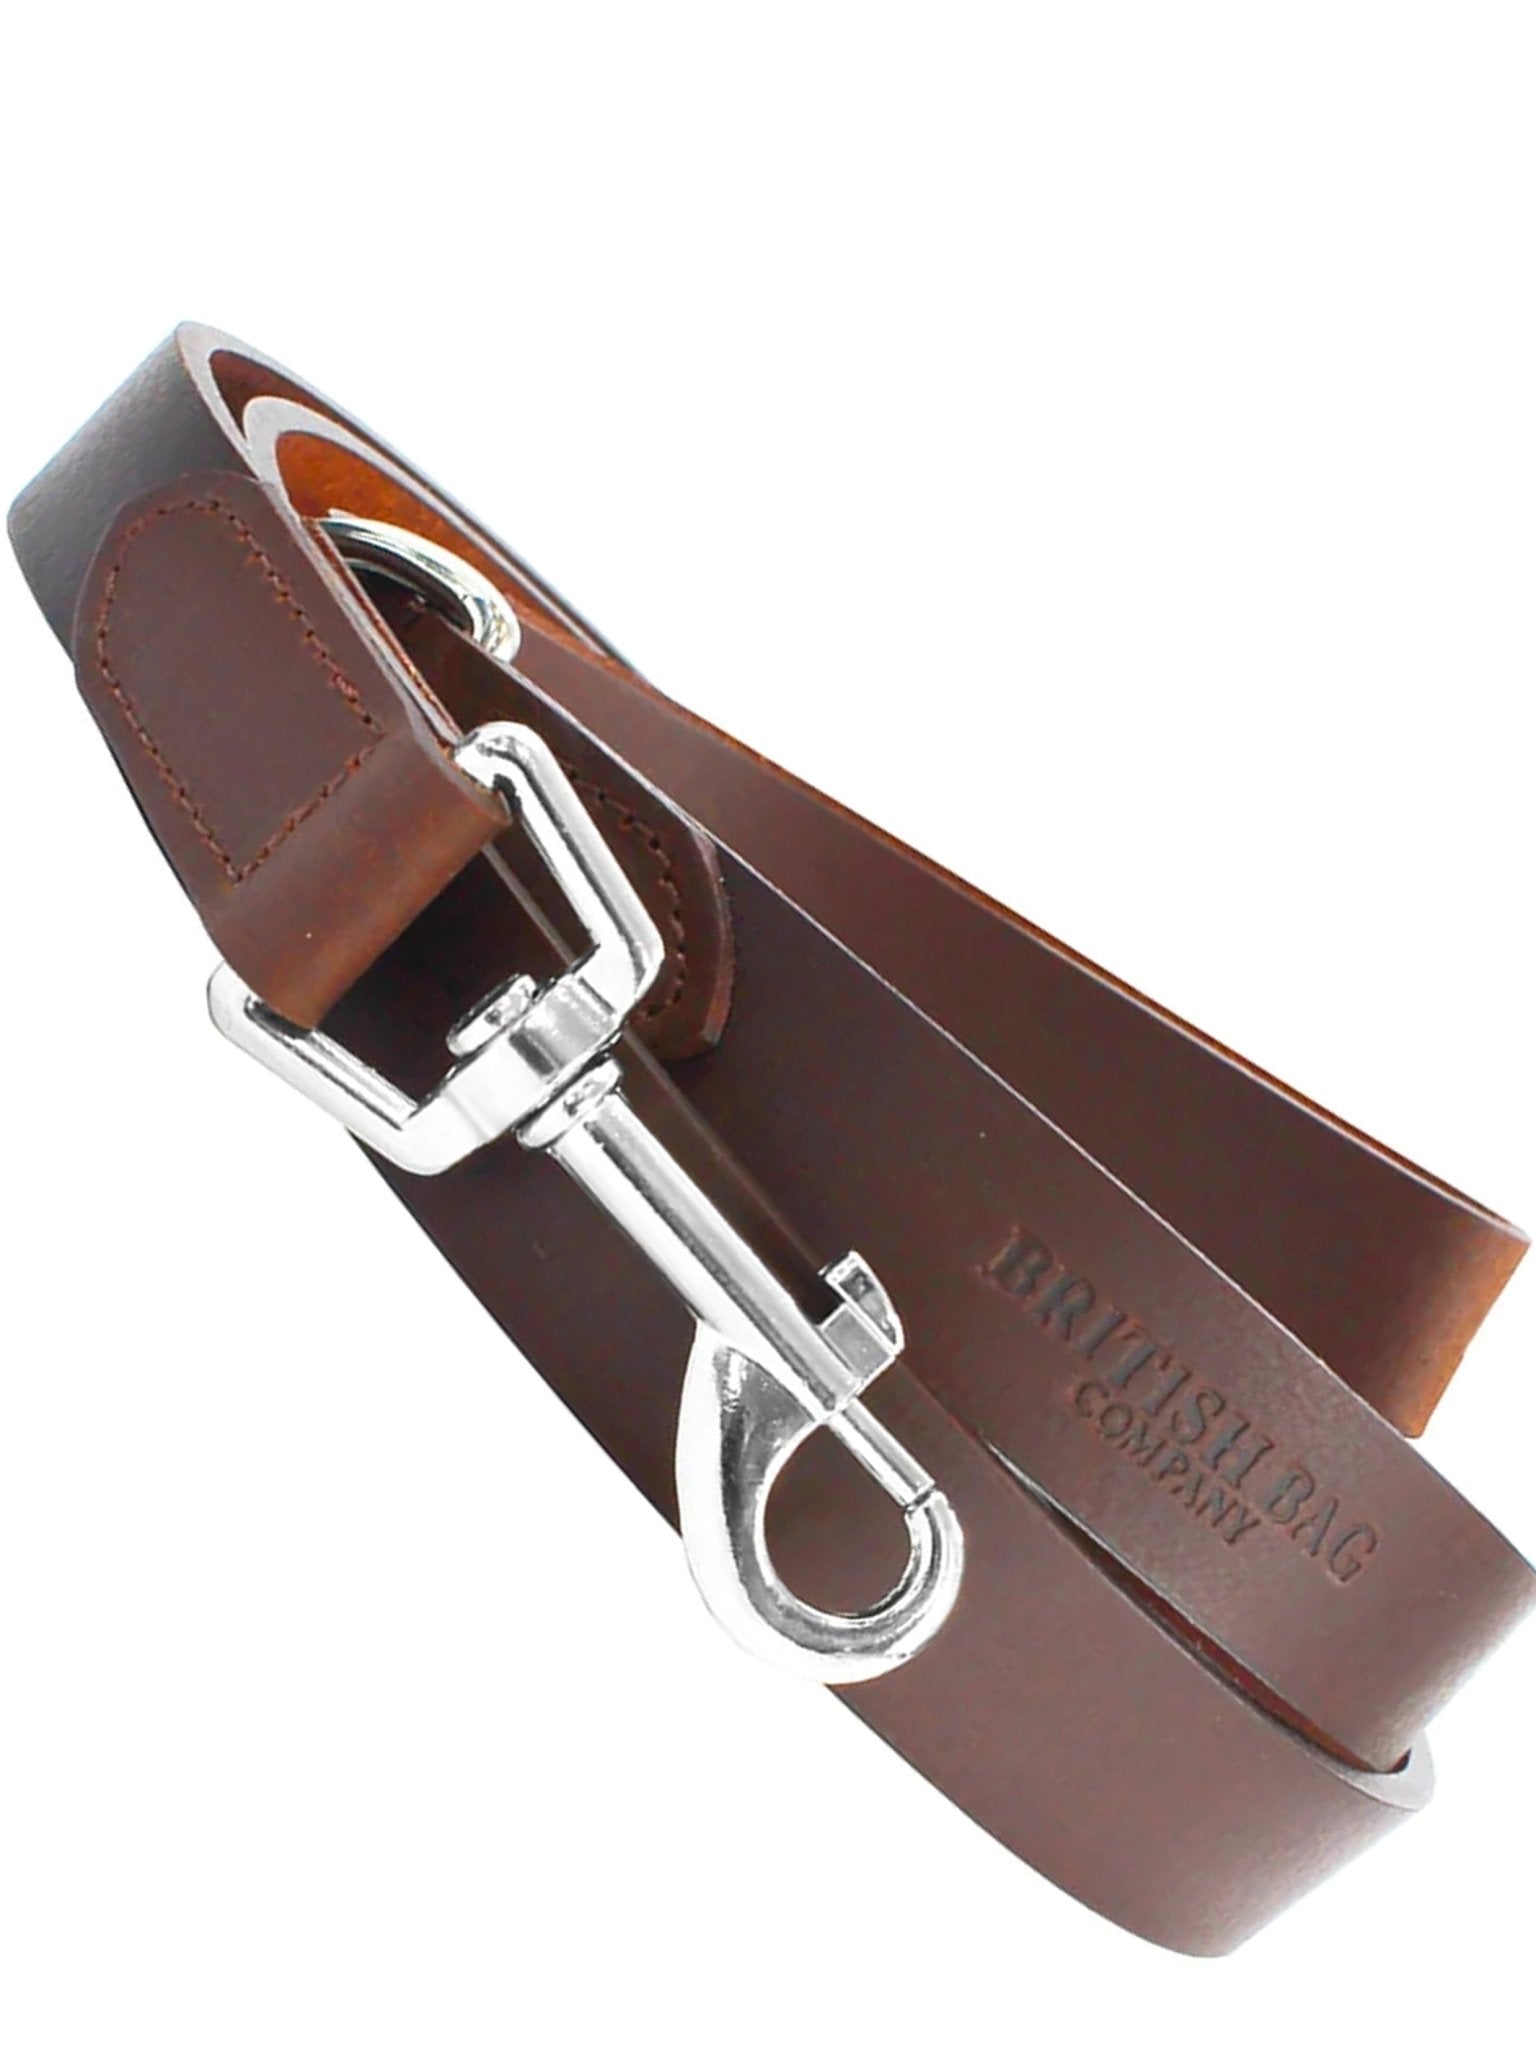 4elementsclothingThe British Bag CompanyThe British Bag Company - Premium Leather Dog Lead 2cm Wide, 110cm Long710122